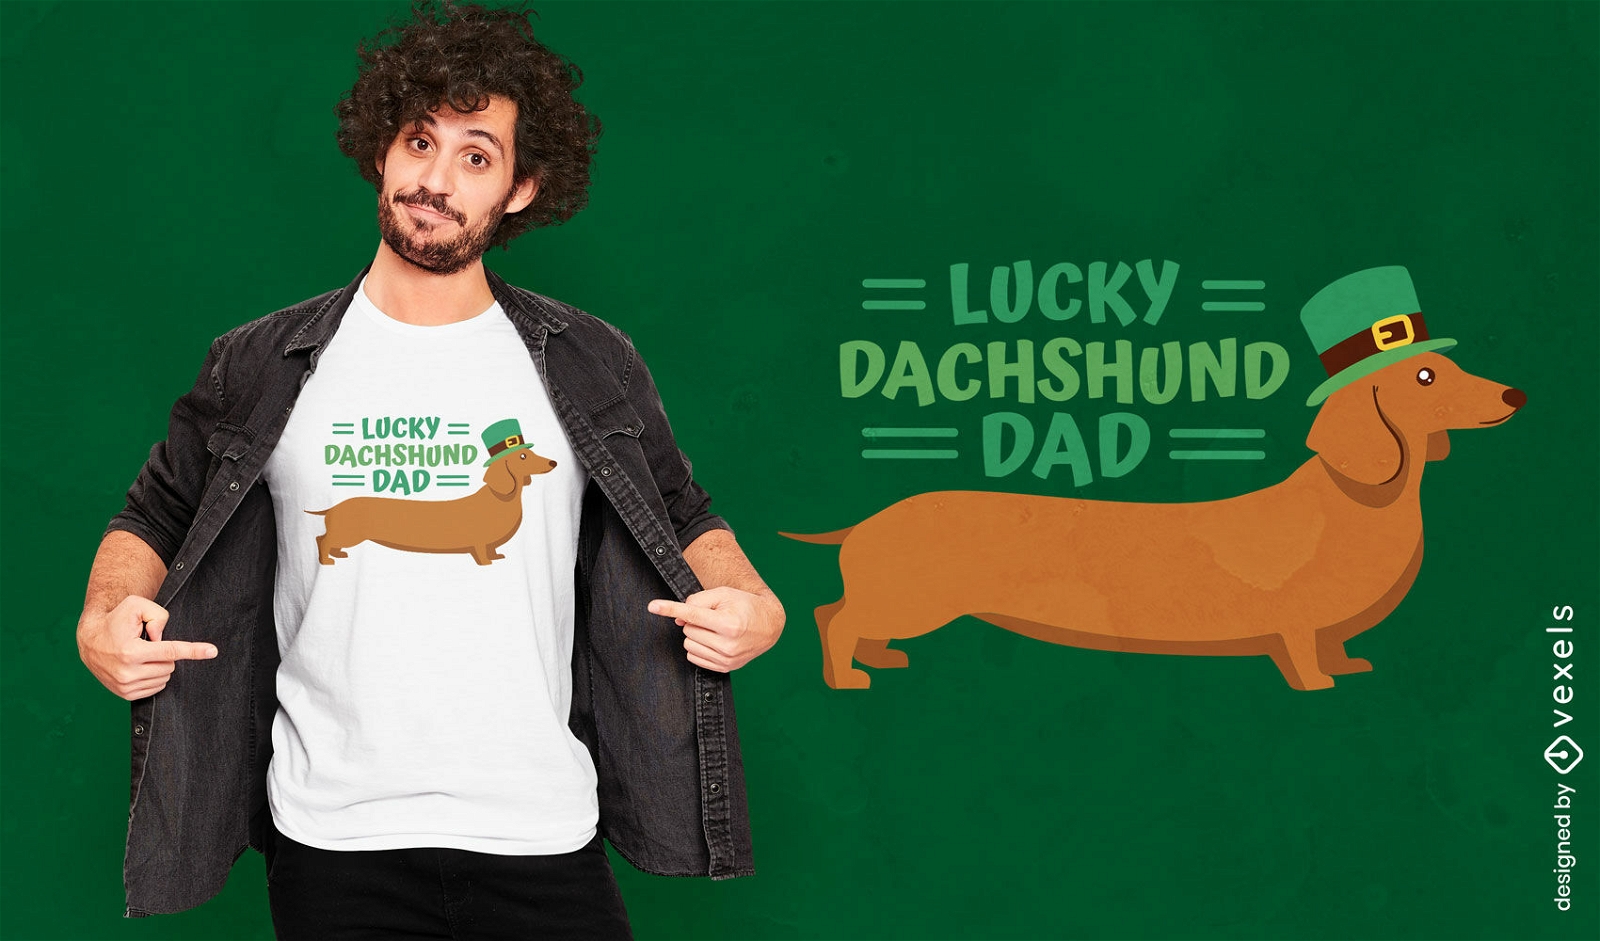 St. Patrick's dachsund dog t-shirt design